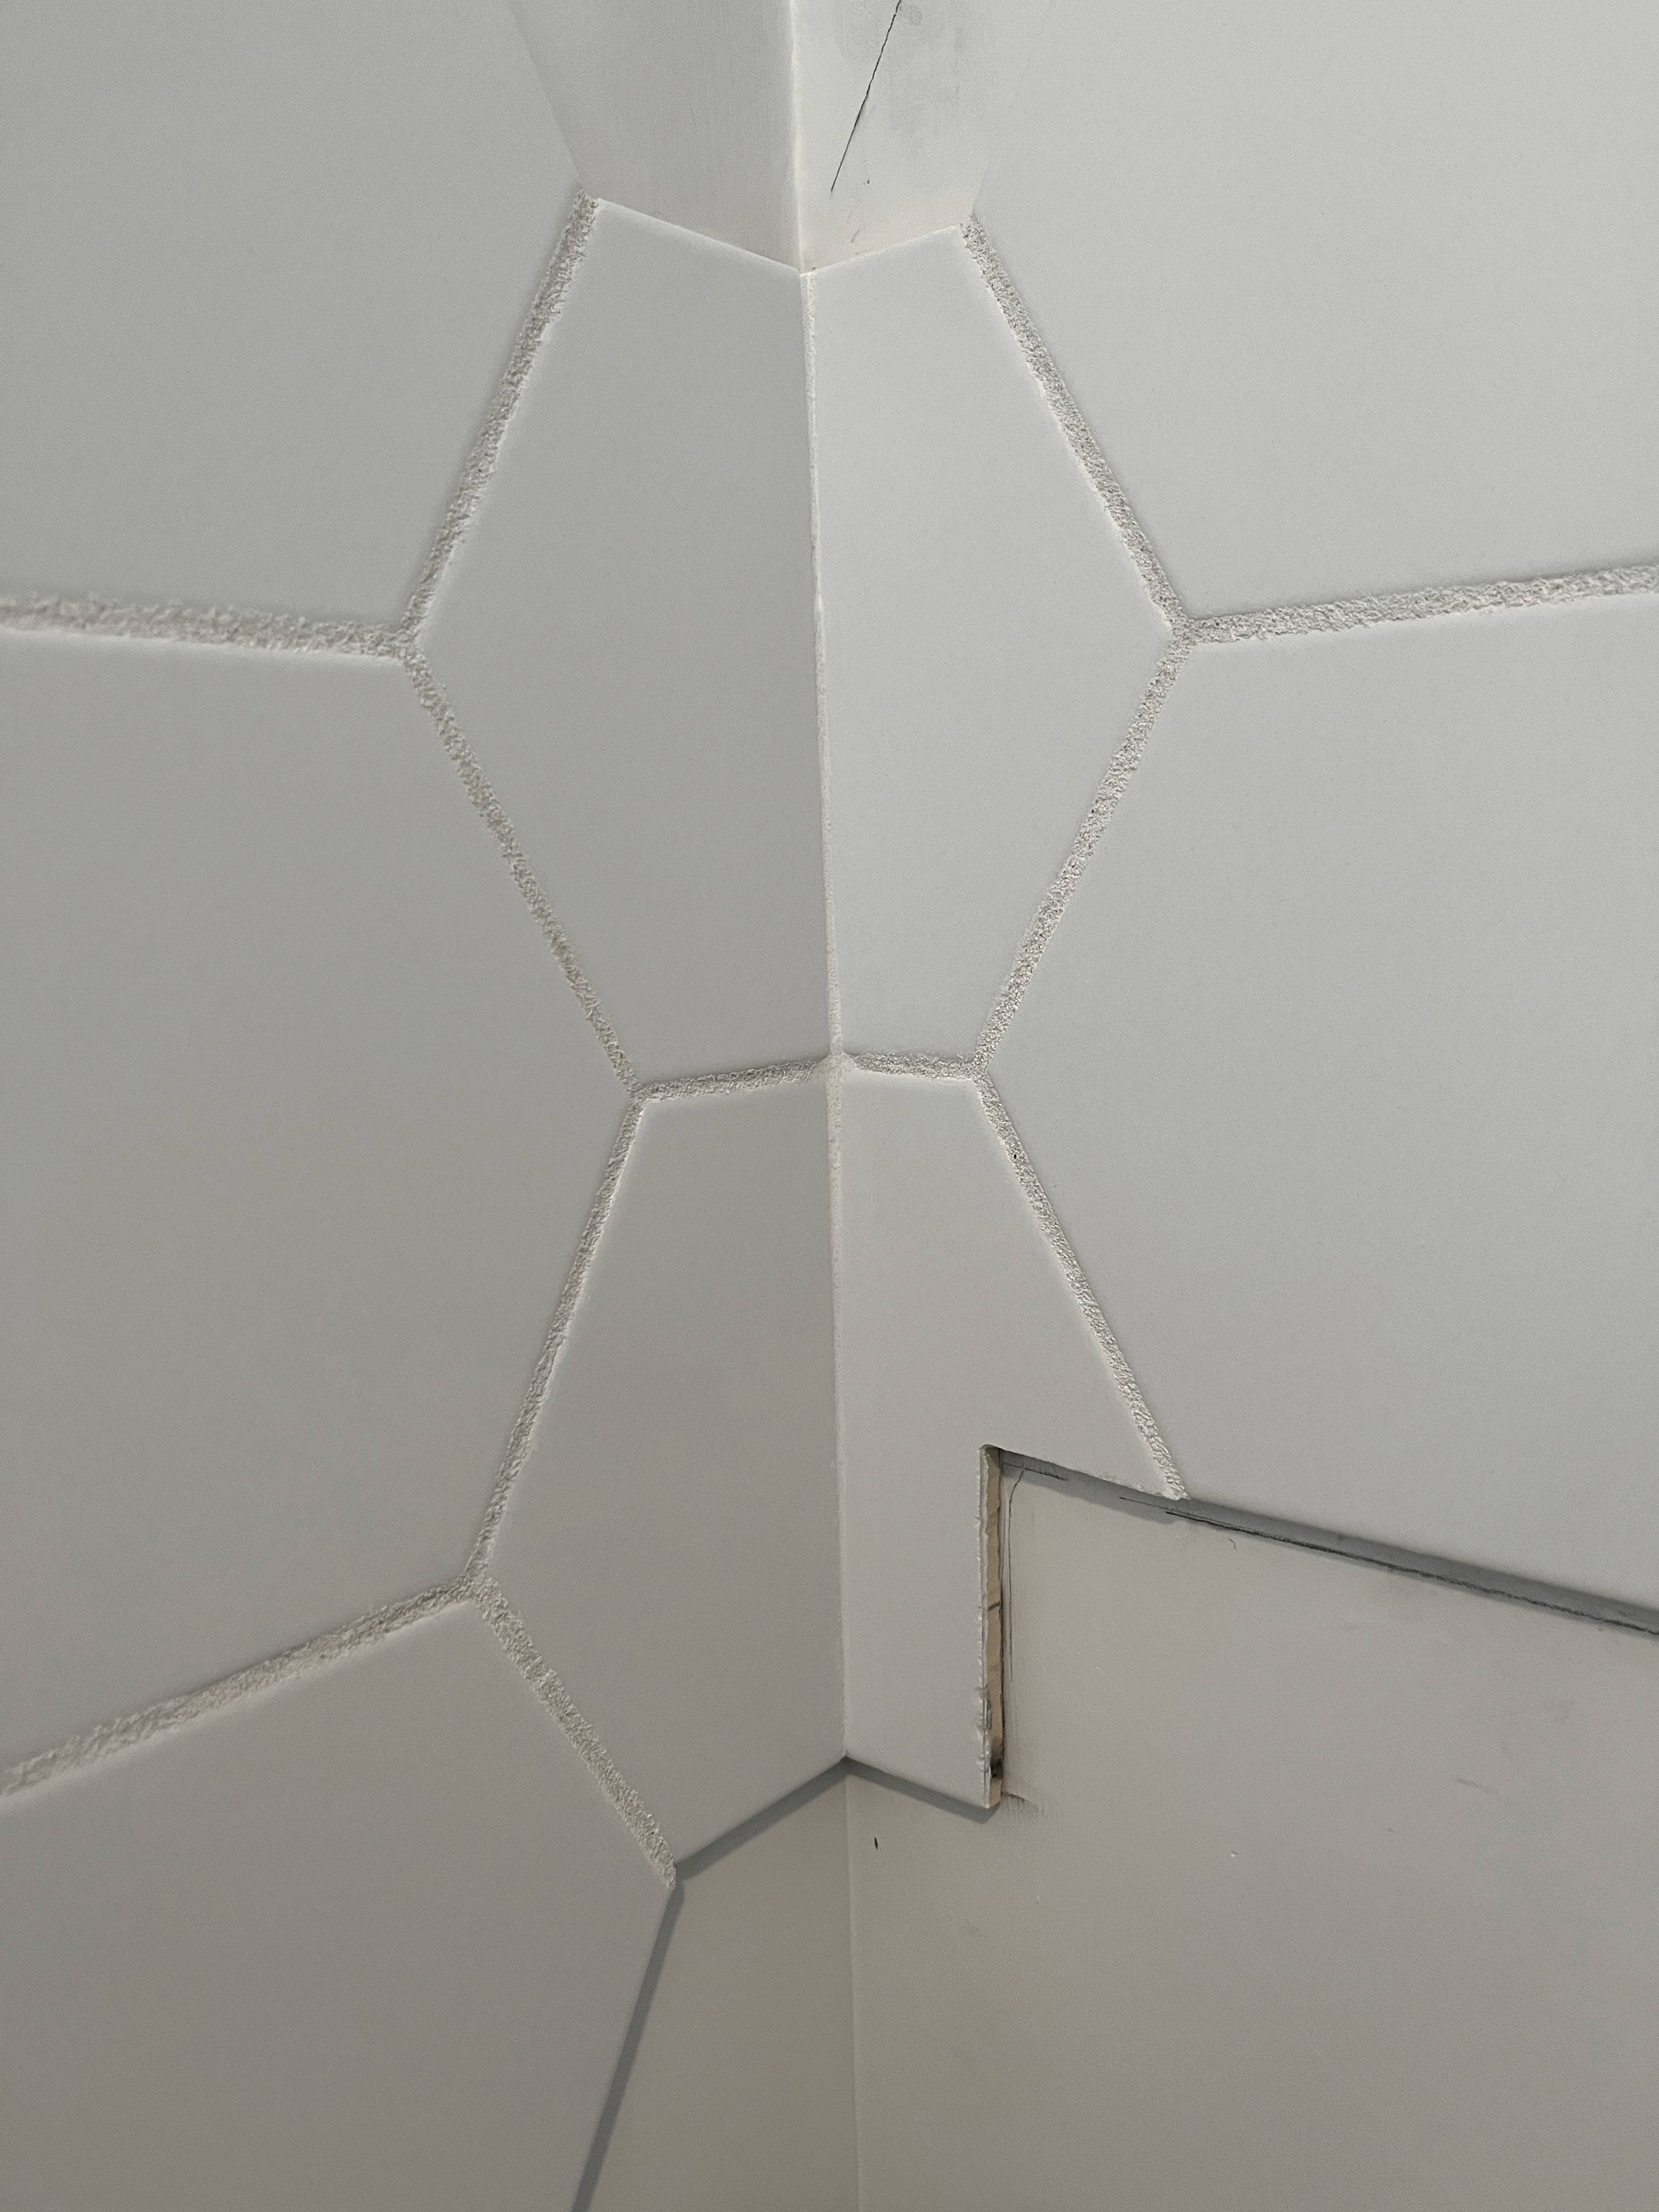 ceramic-tile-caulk